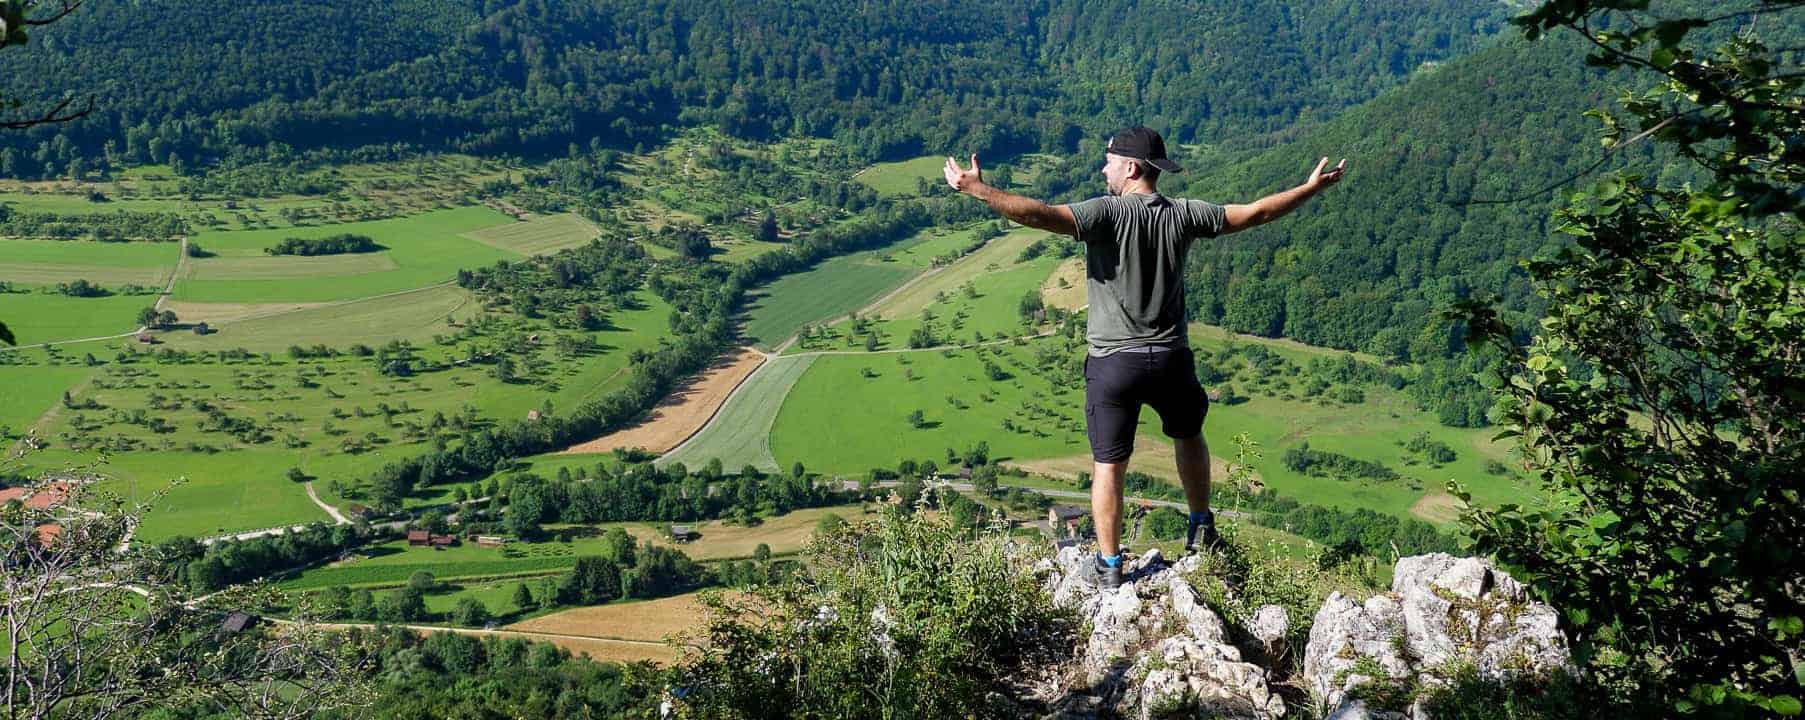 Germanys best hiking trails - Intrepid Escape